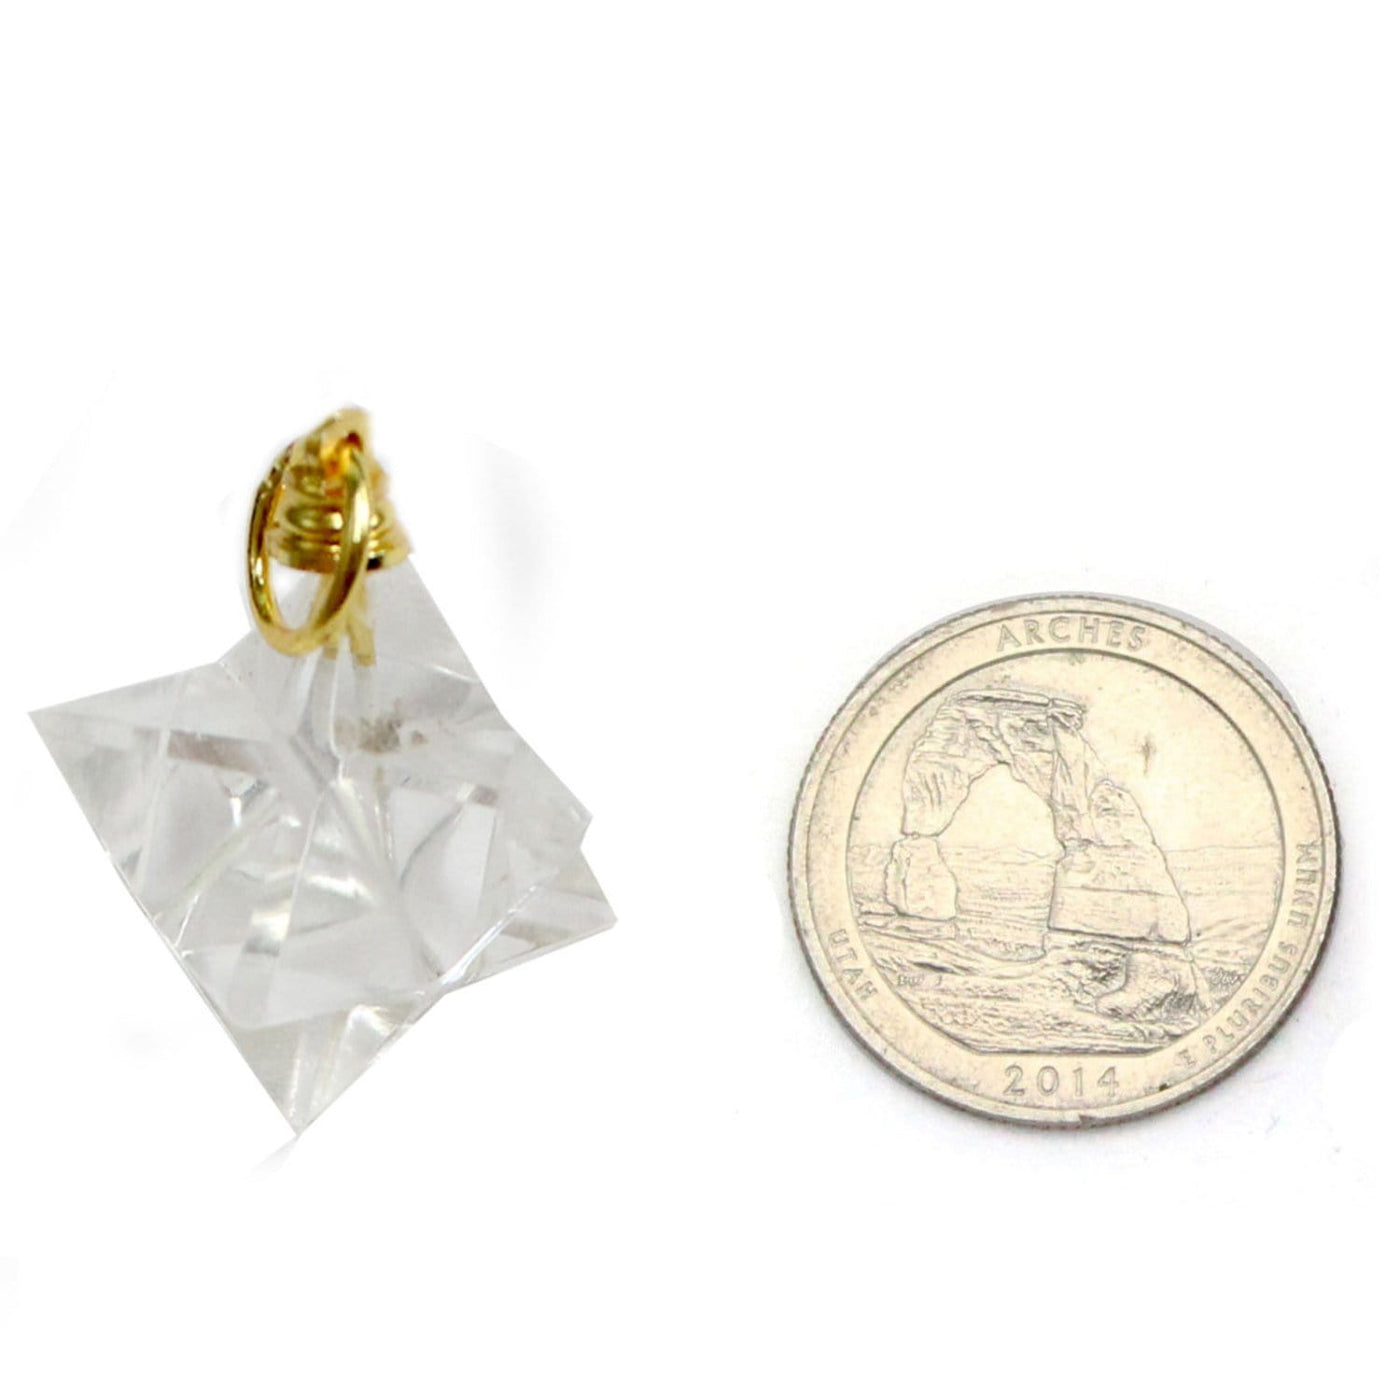 crystal quartz merkaba star pendant next to a quarter for size reference